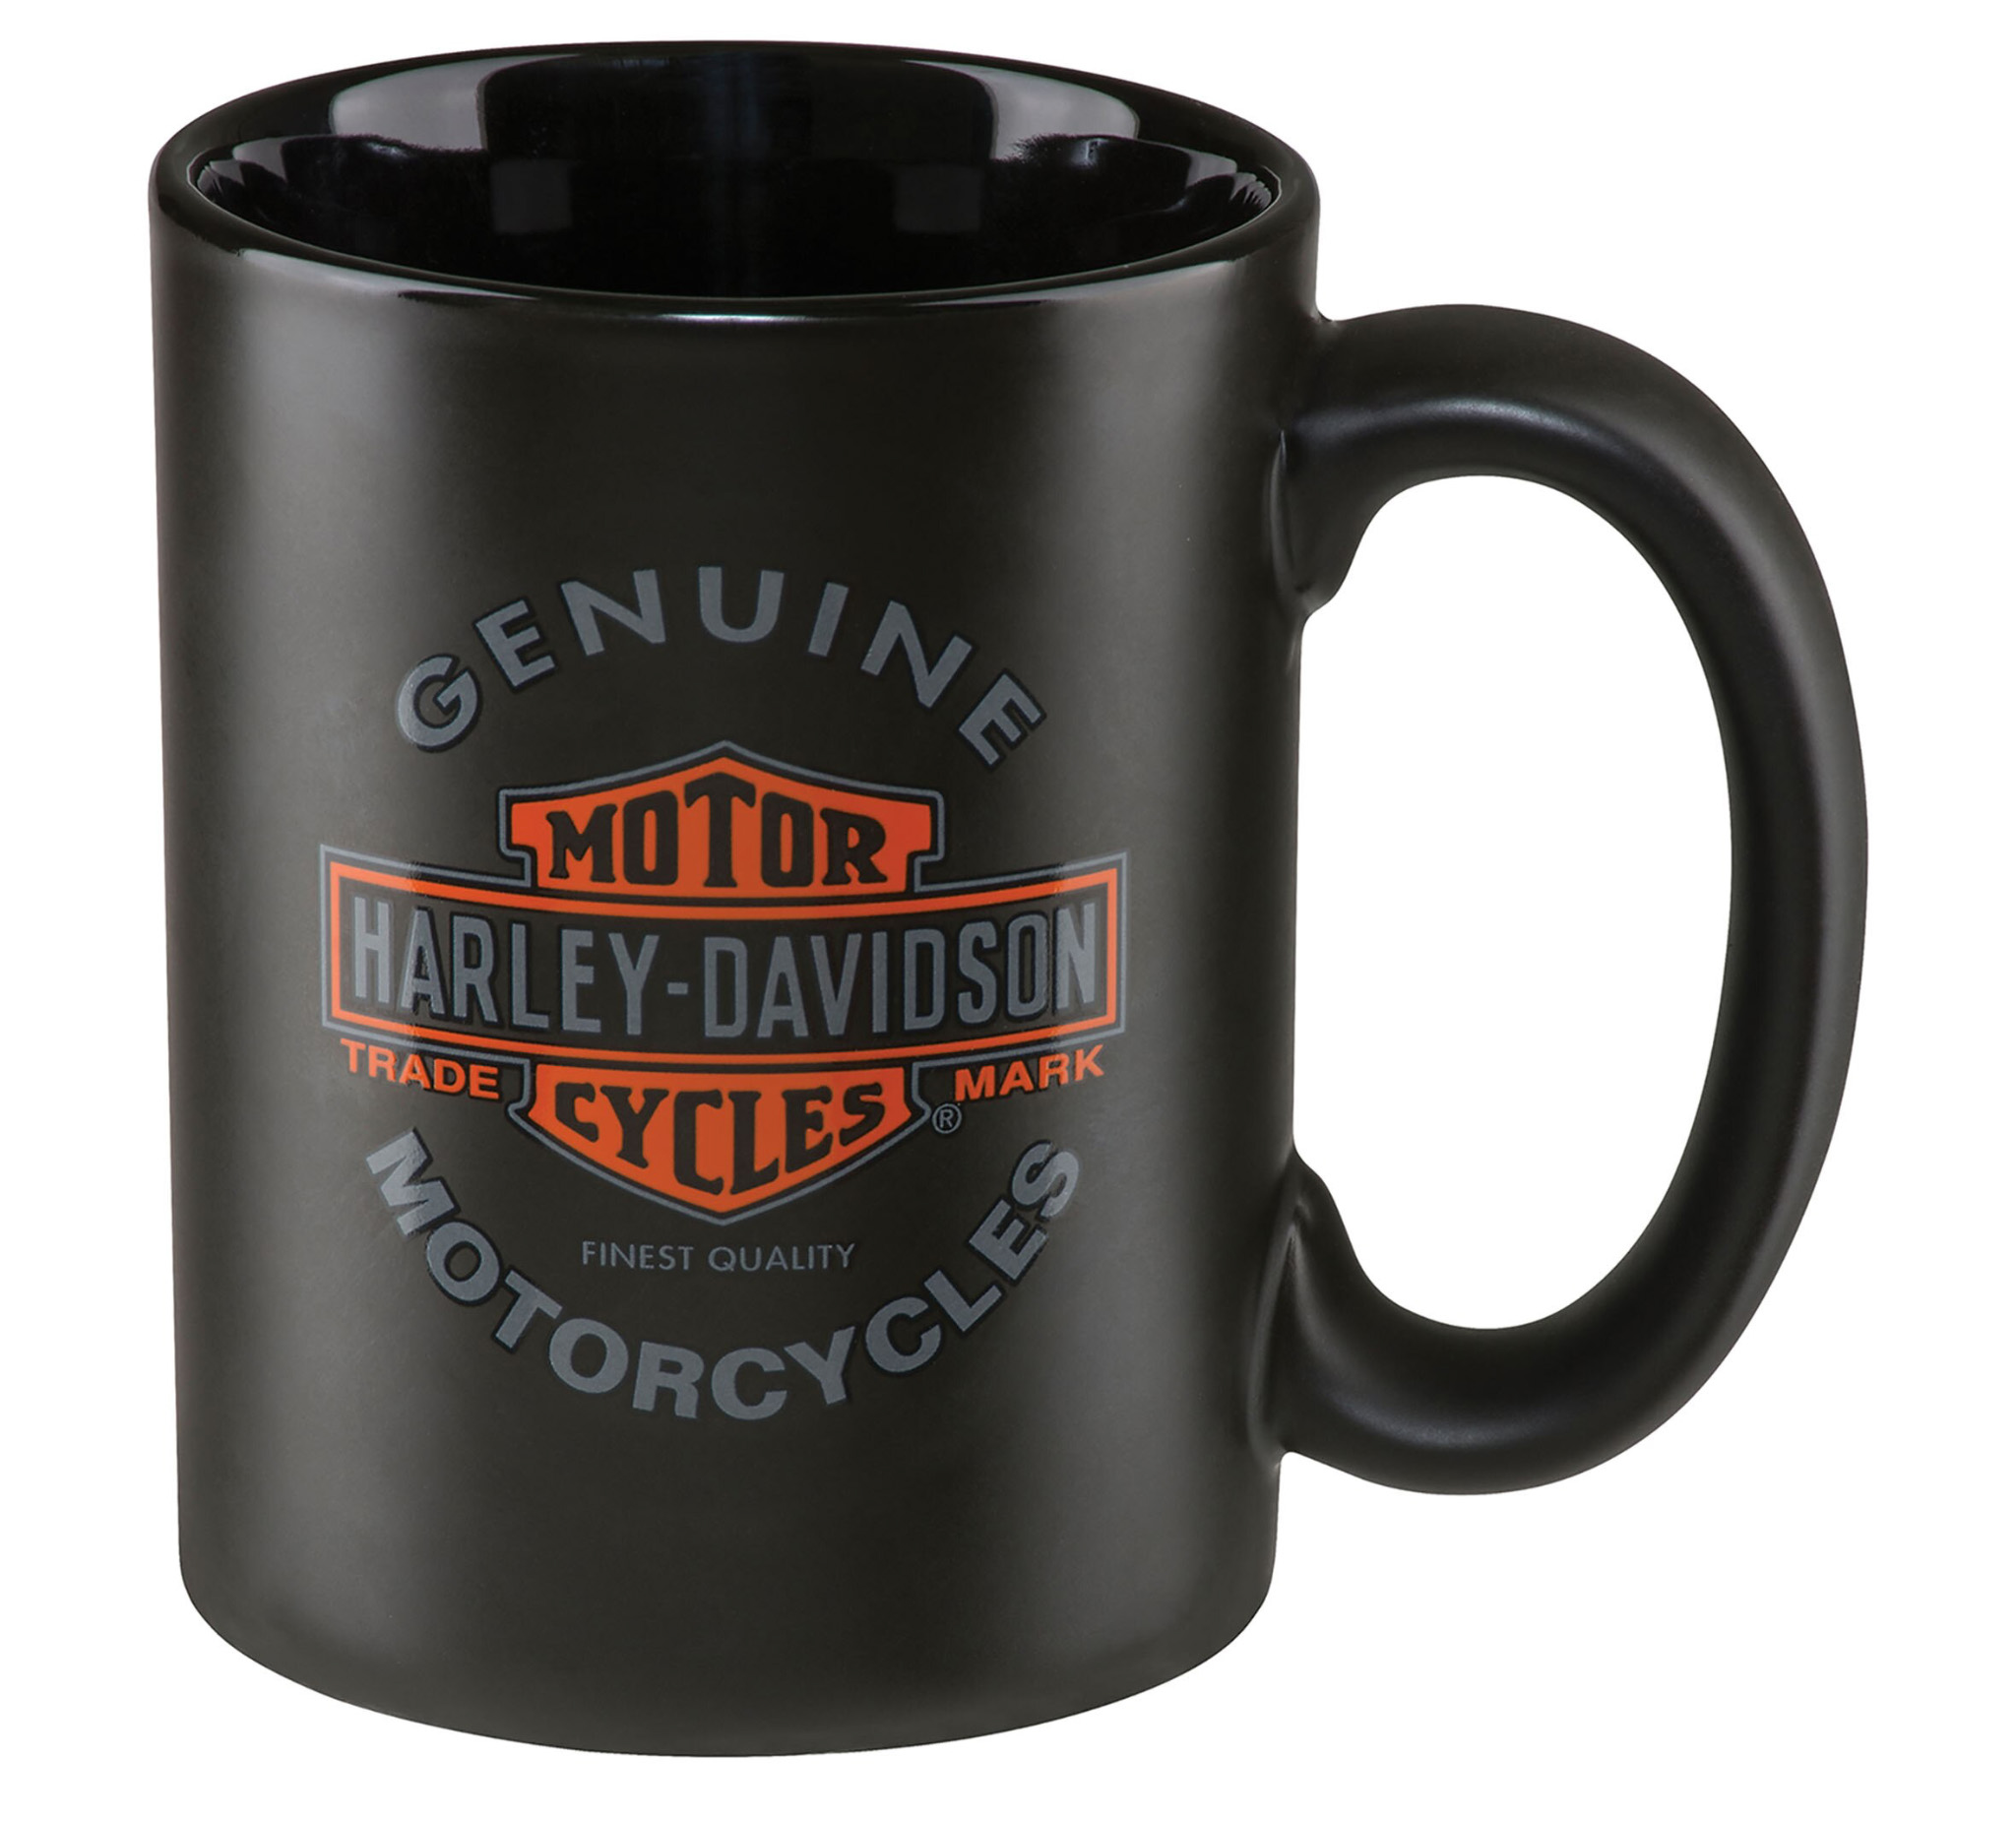 Genuine Motorcycles Coffee Mug